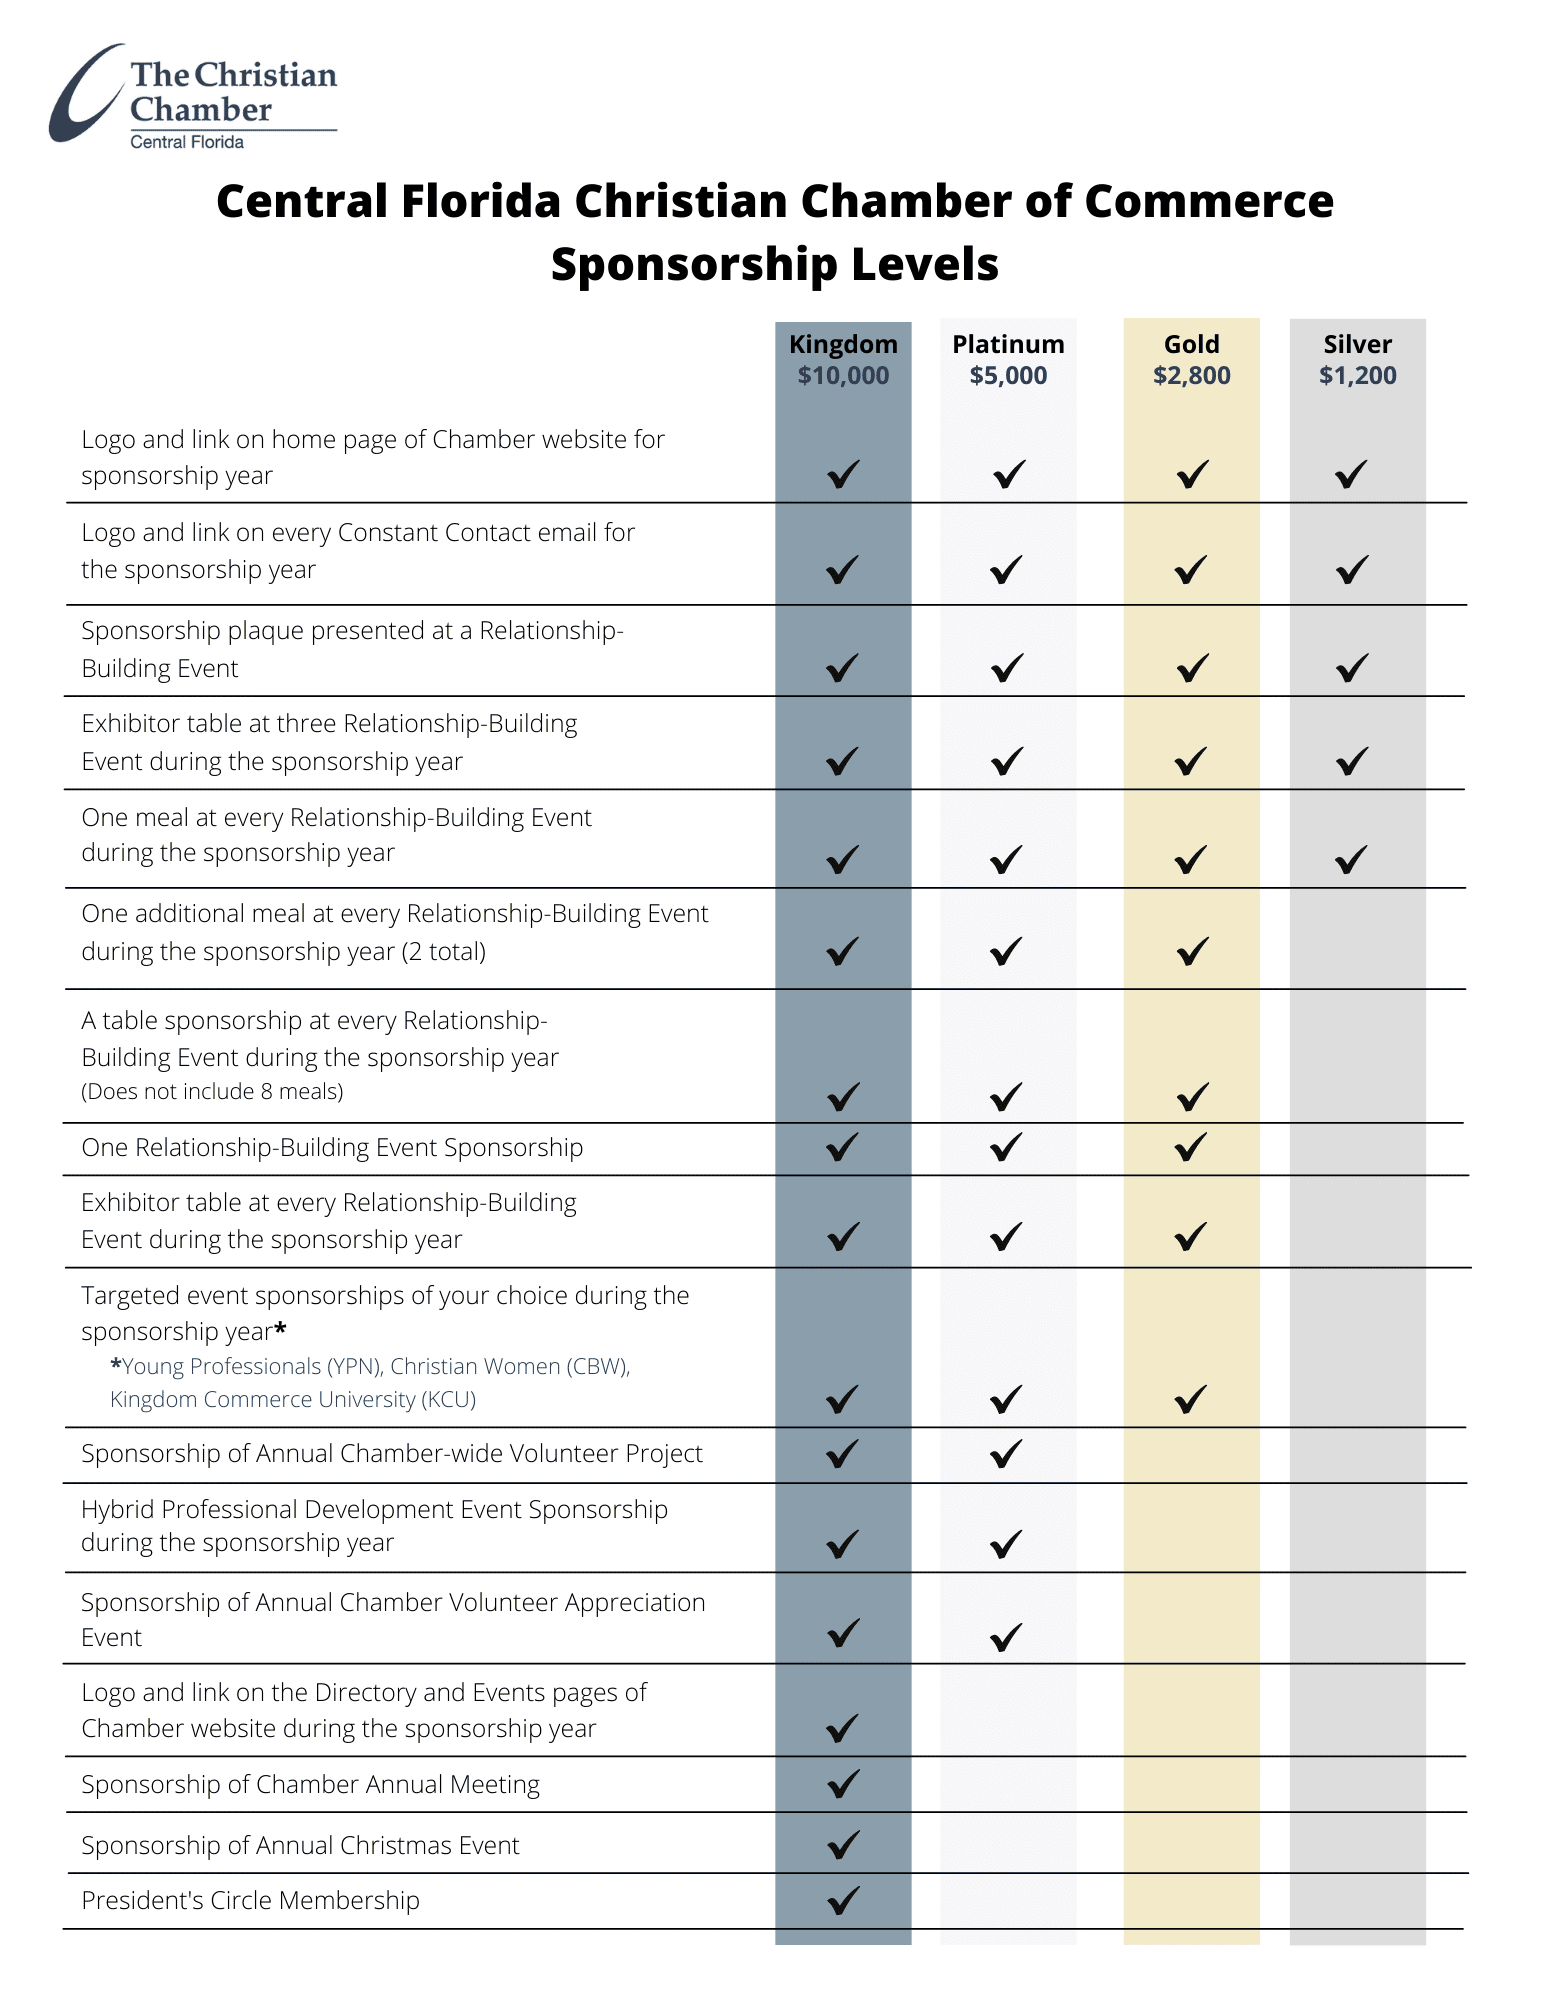 CFC-Sponsorship-Levels-